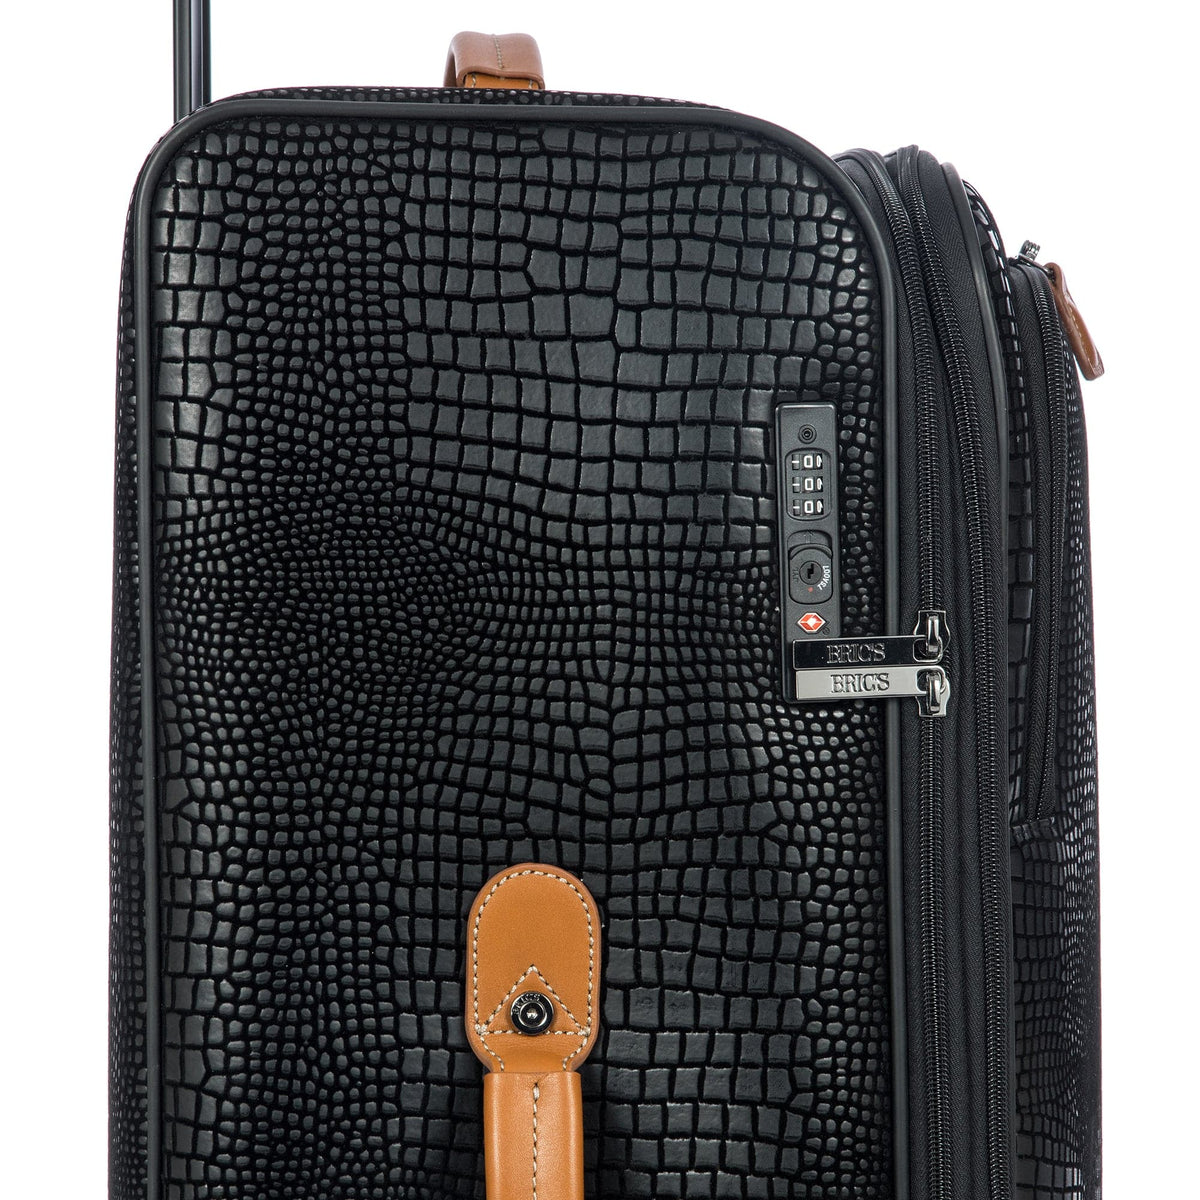 Bric's Mysafari 28" Expandable Spinner Luggage